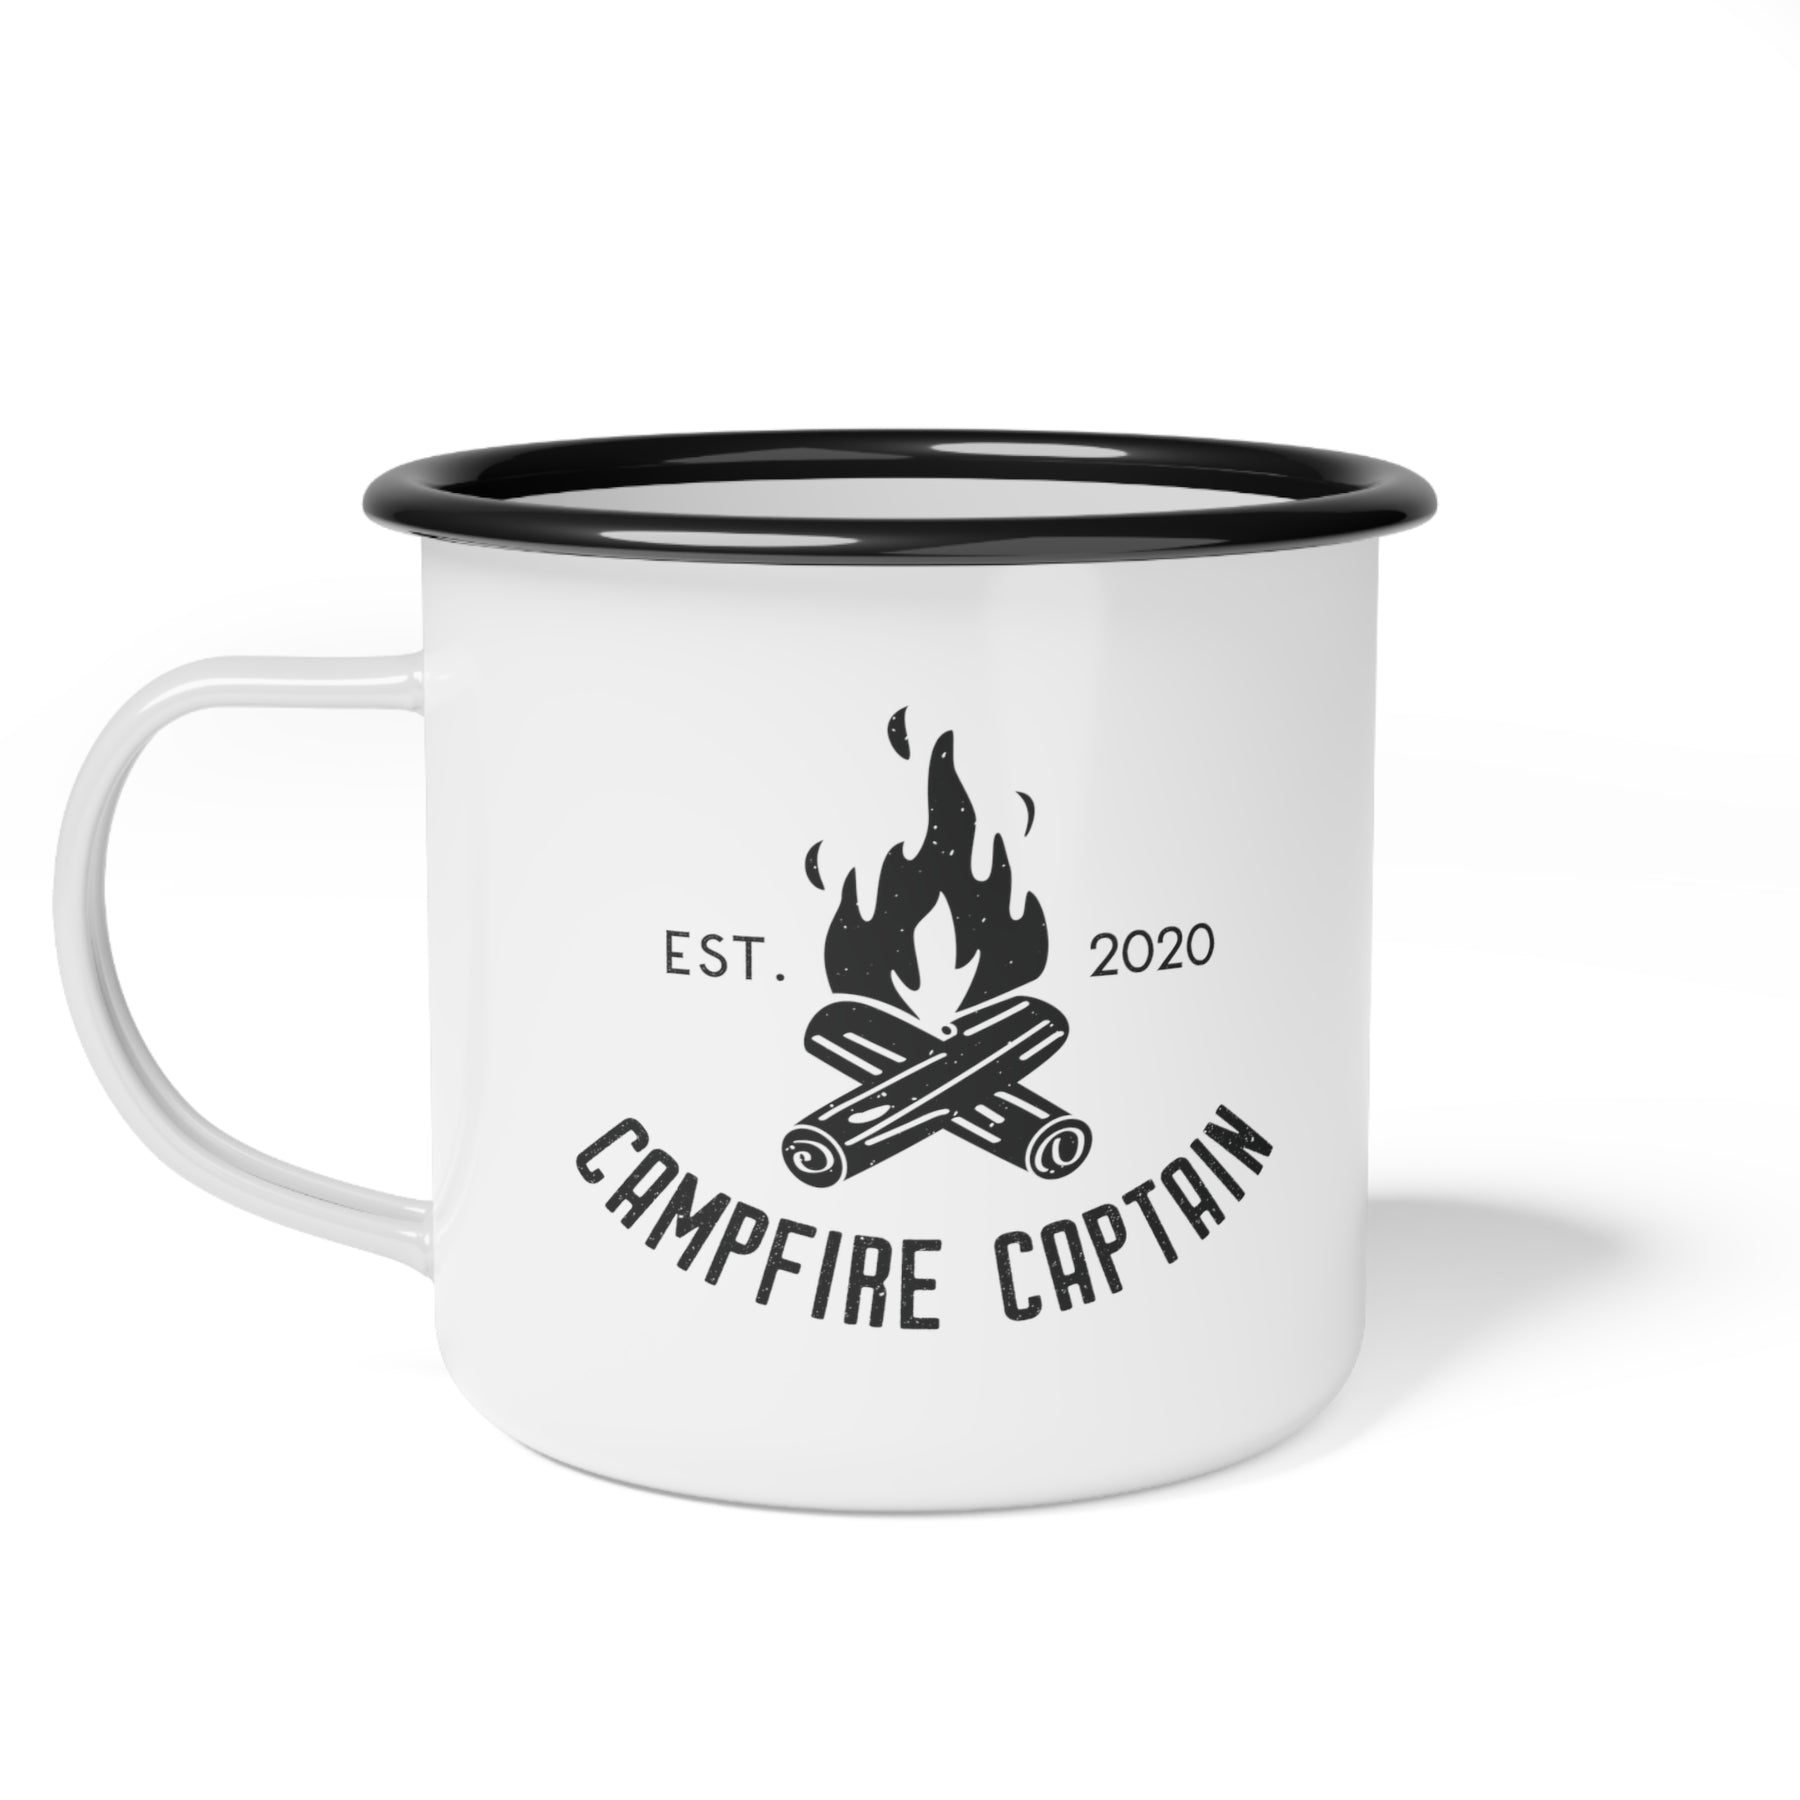 Campfire Captain - Enamel Camp Cup